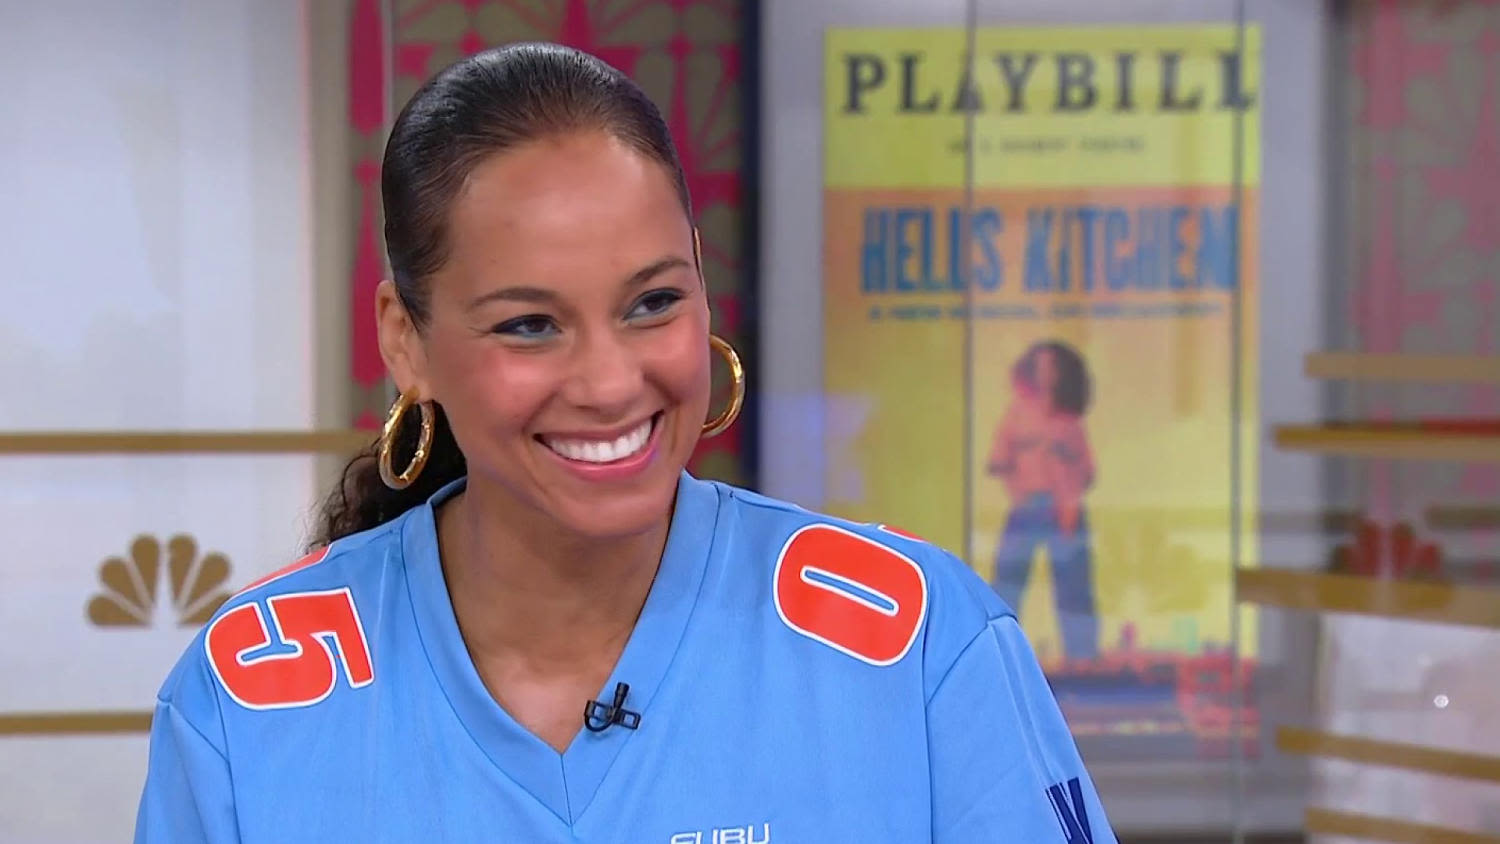 'I feel so grateful': Alicia Keys celebrates the success of 'Hell's Kitchen'